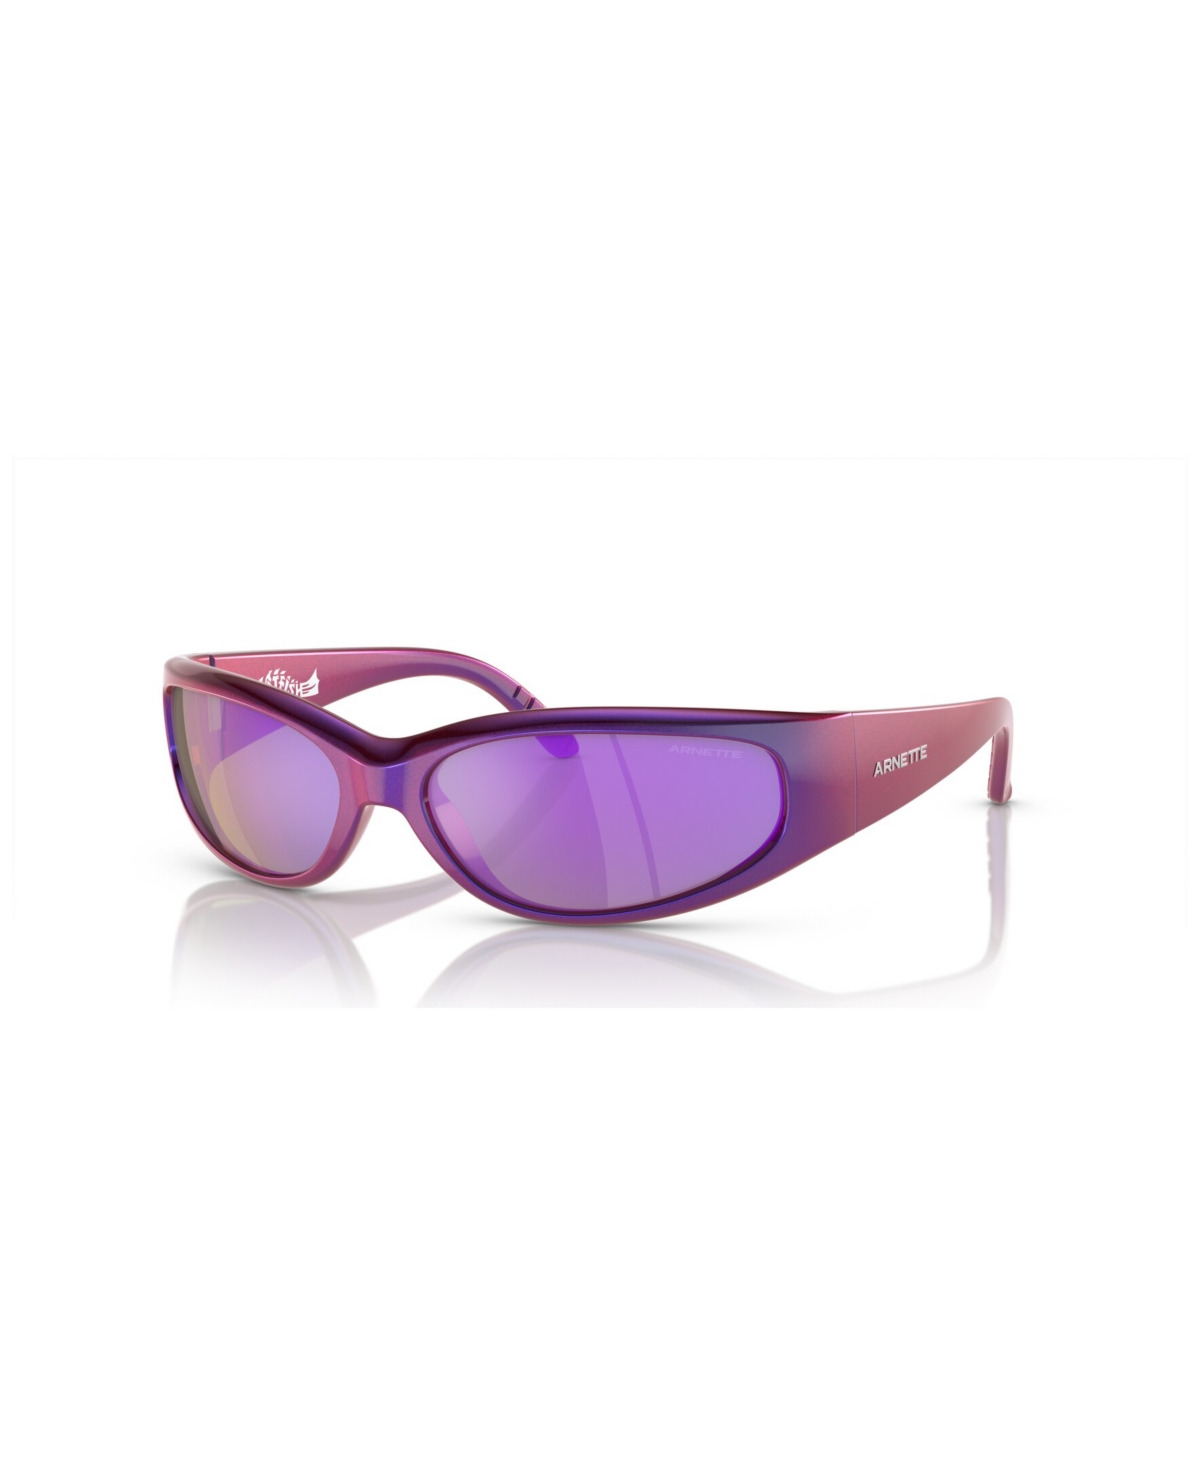 Arnette Men's Catfish Sunglasses, Mirror An4302 In Iridescent Blue,violet